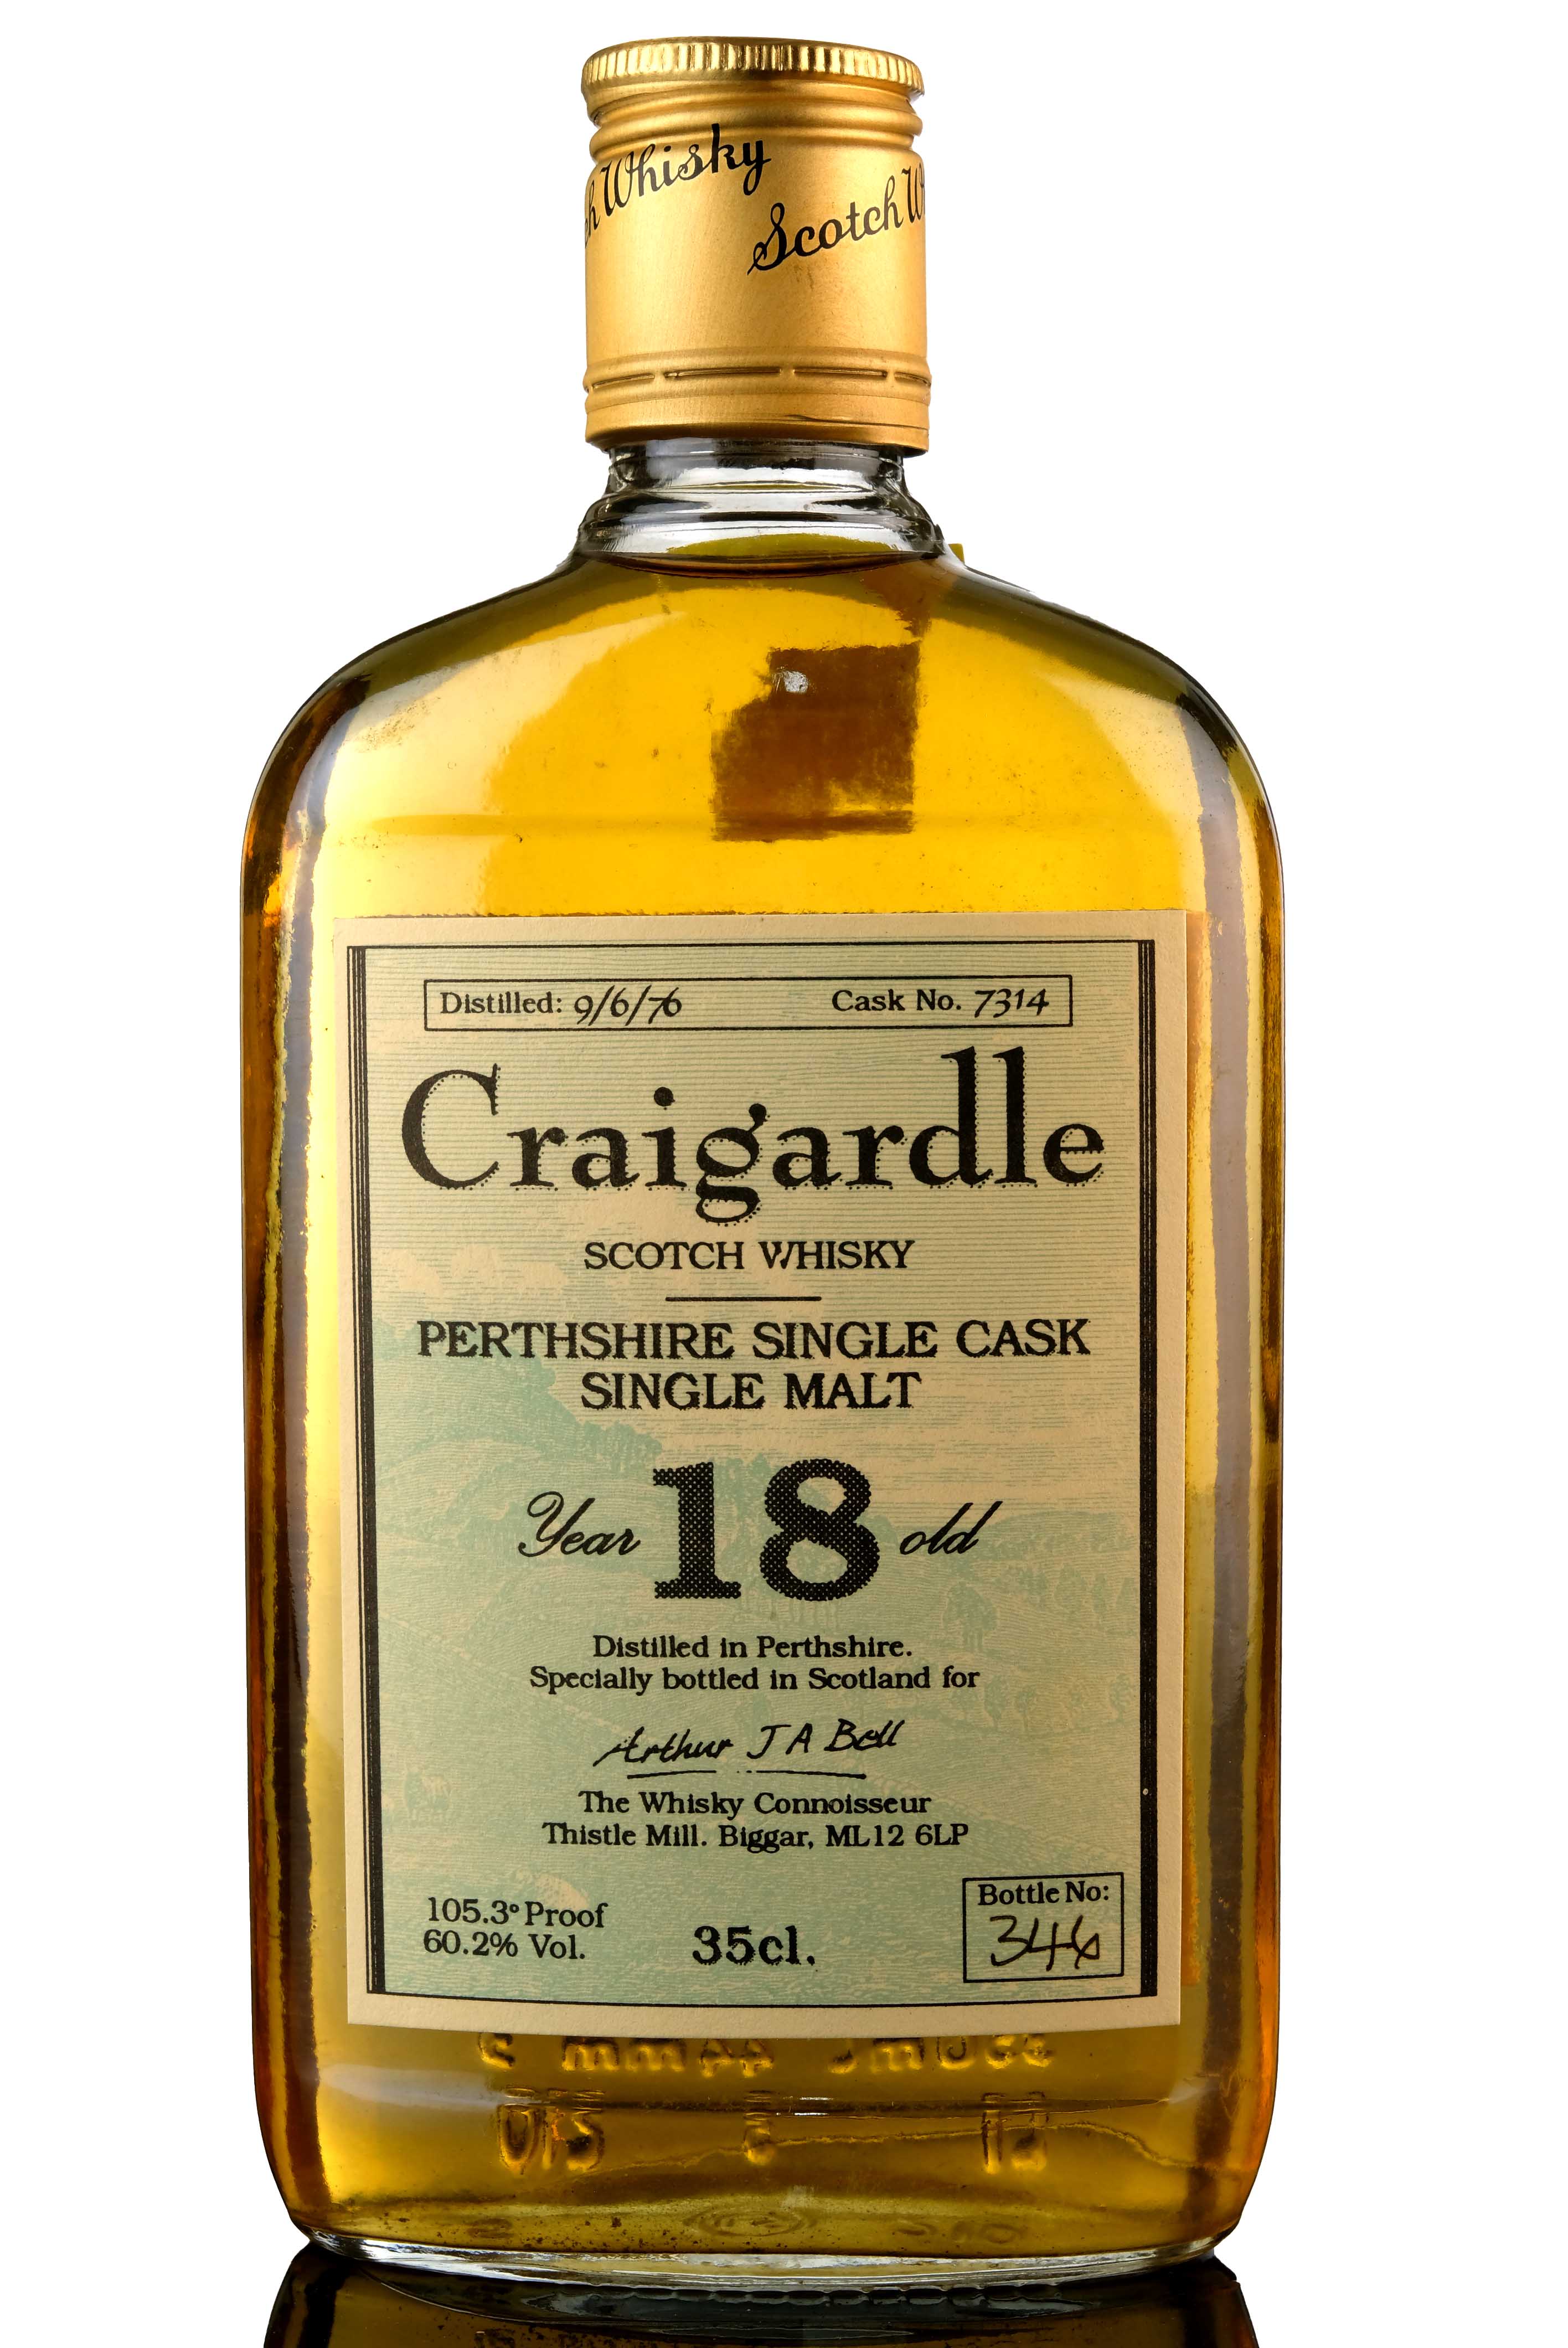 Craigardle (Blair Athol) 1976 - 18 Year Old - The Whisky Connoisseur - Single Cask 7314 - 